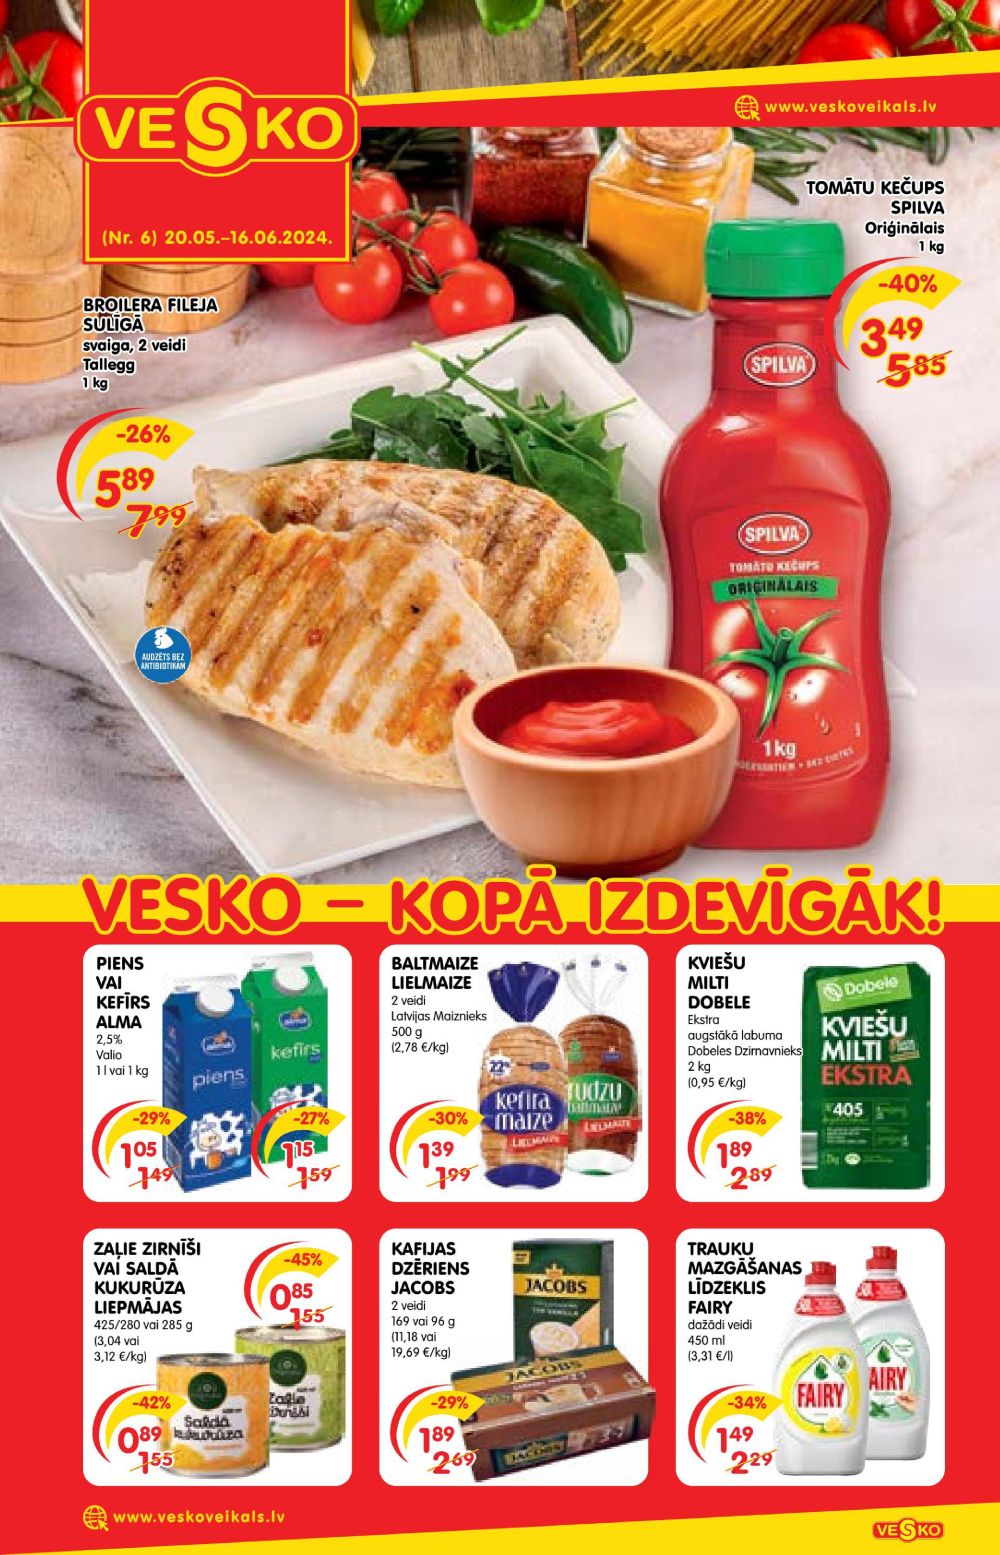 vesko - VESKO (20.05.2024 - 16.06.2024) - page: 1